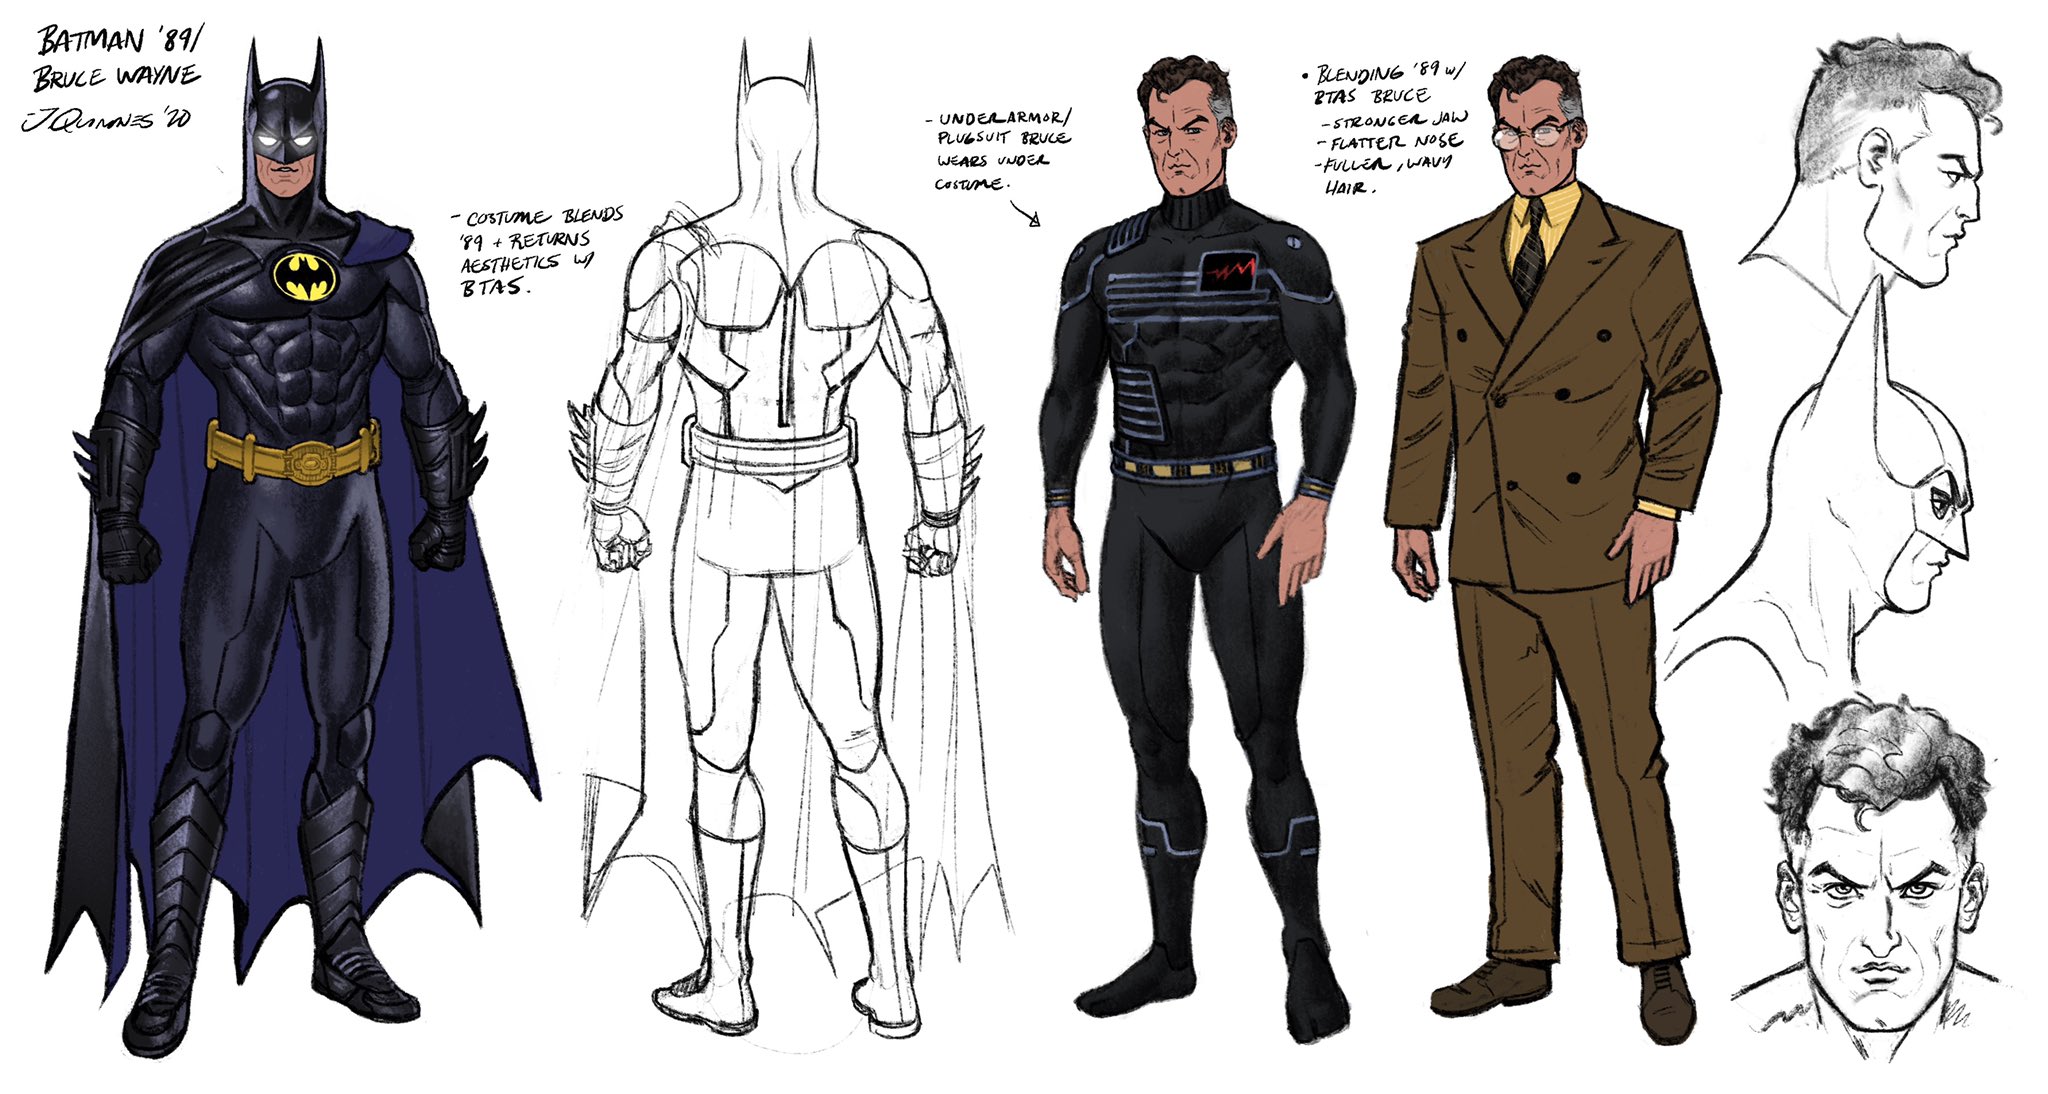 Finally! SUPERMAN ’78 and BATMAN ’89 Comics Coming From DC